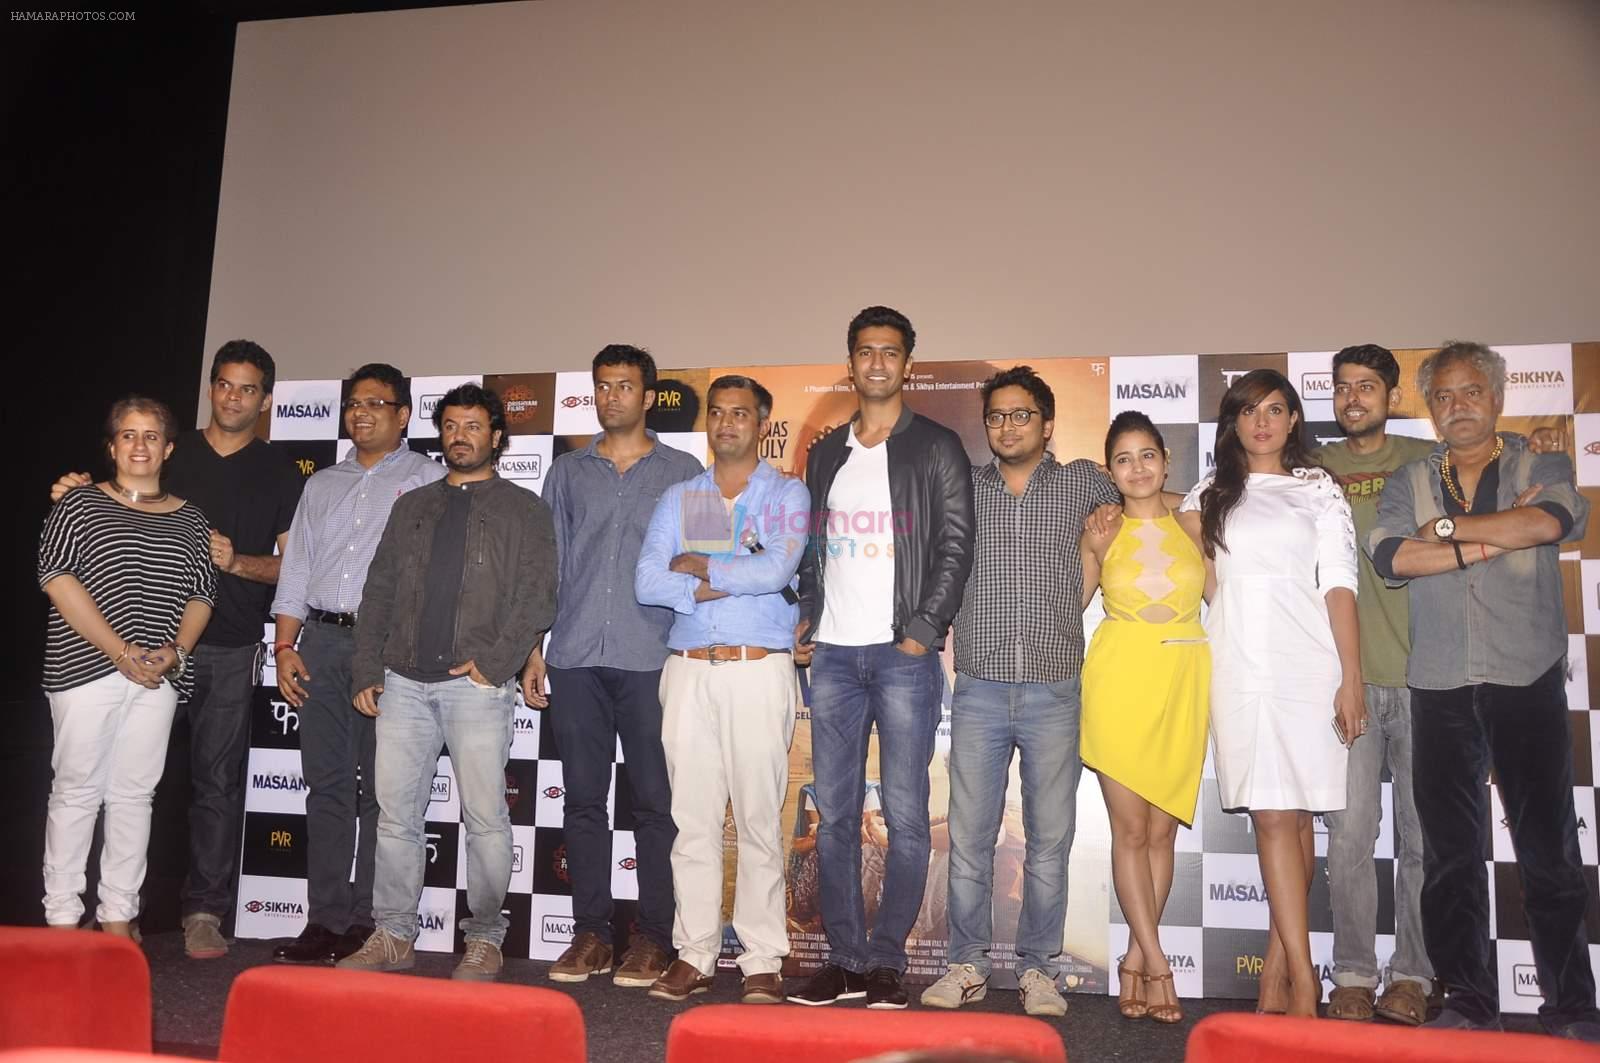 Richa Chadda, Sanjay Mishra,  Neeraj Ghaywan, Vicky Kaushal, Shweta Tripathi, Vikas Bahl, Vikramaditya Motwane at Masan trilor launch in Mumbai on 26th June 2015